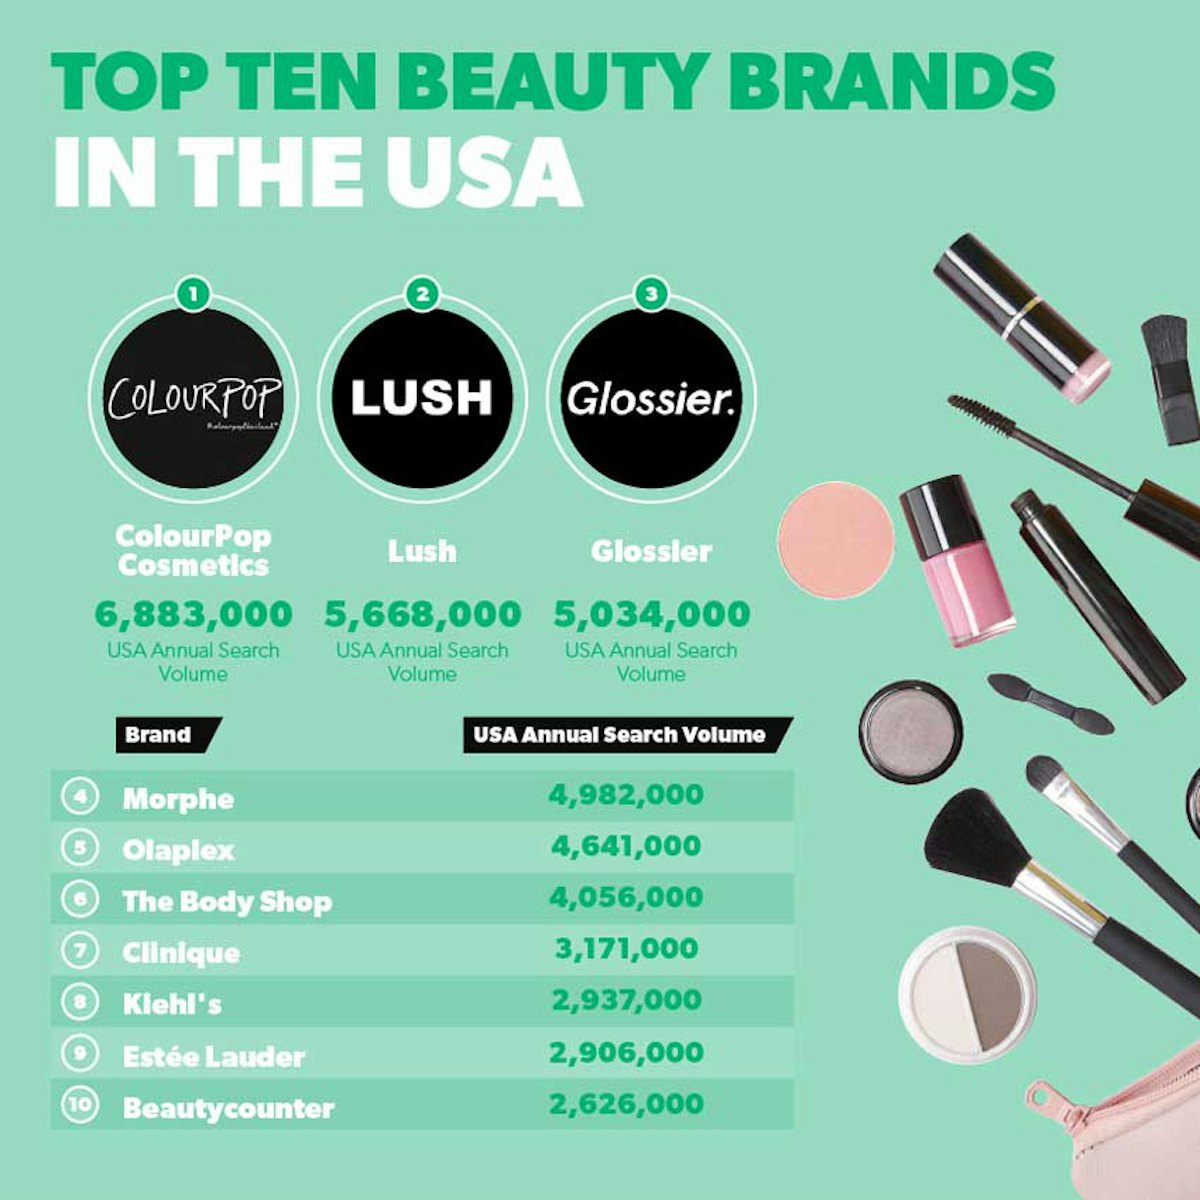 Online Cosmetics Companies - Top Company List